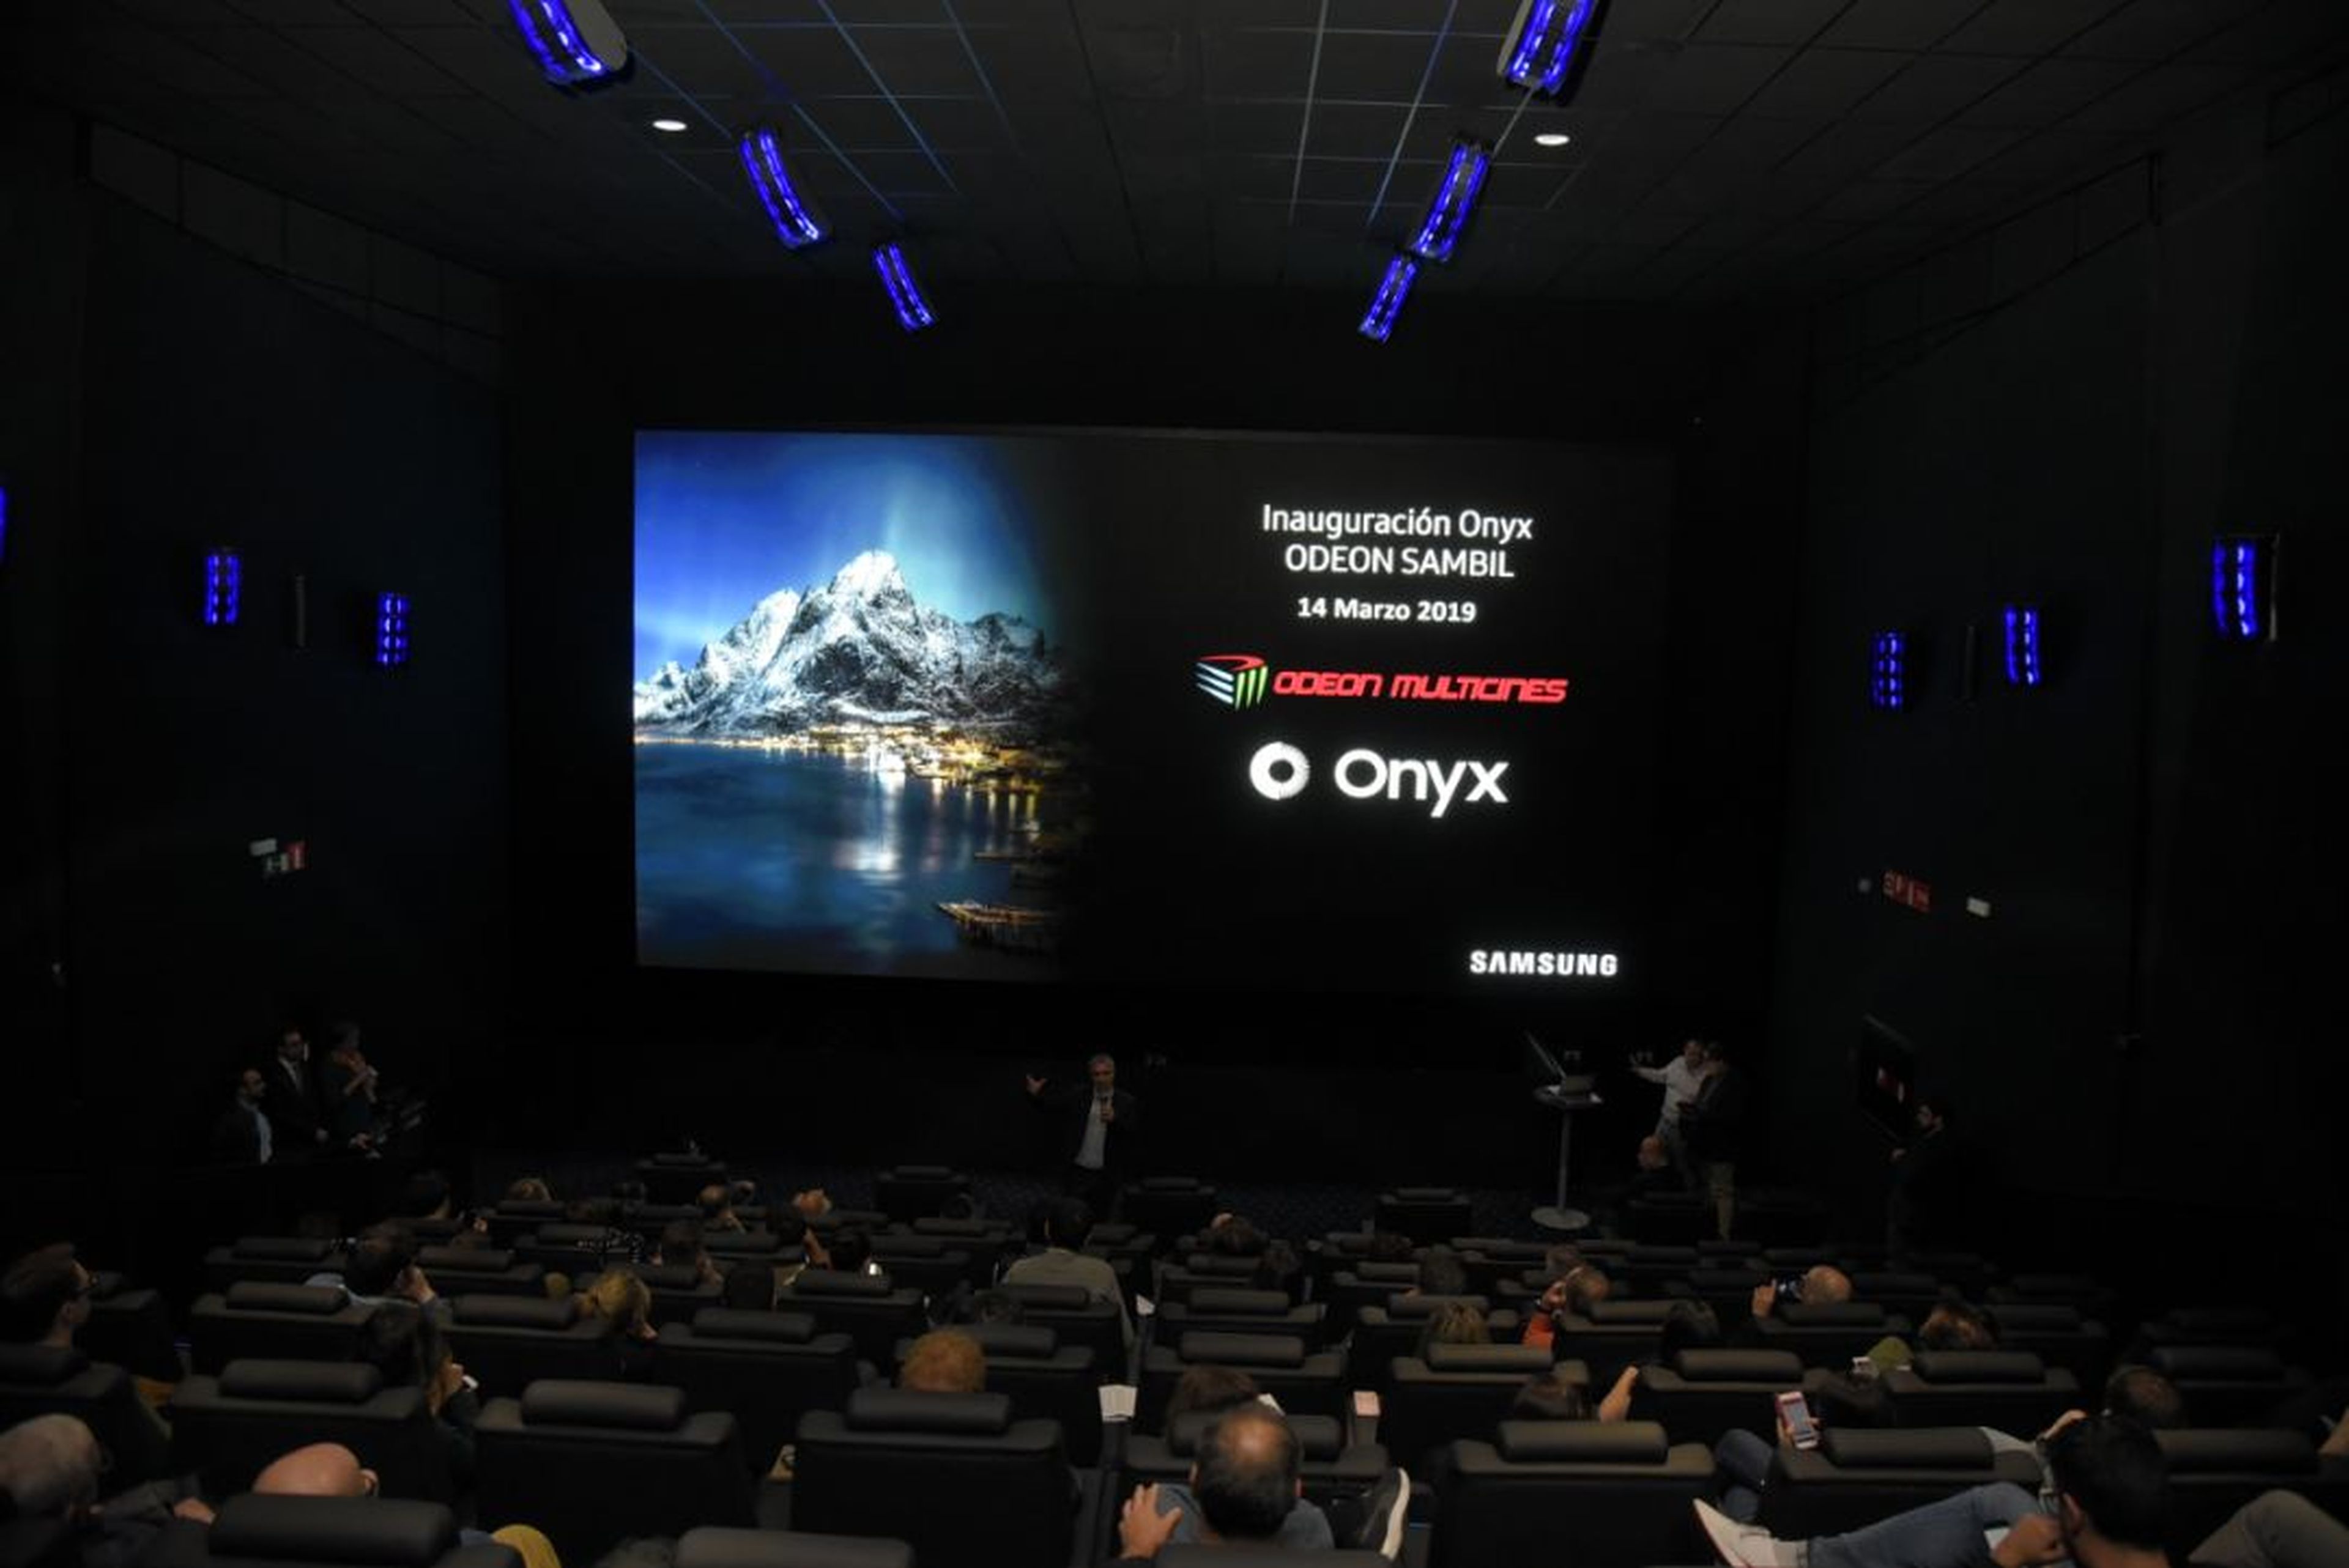 Cine Onyx Samsung